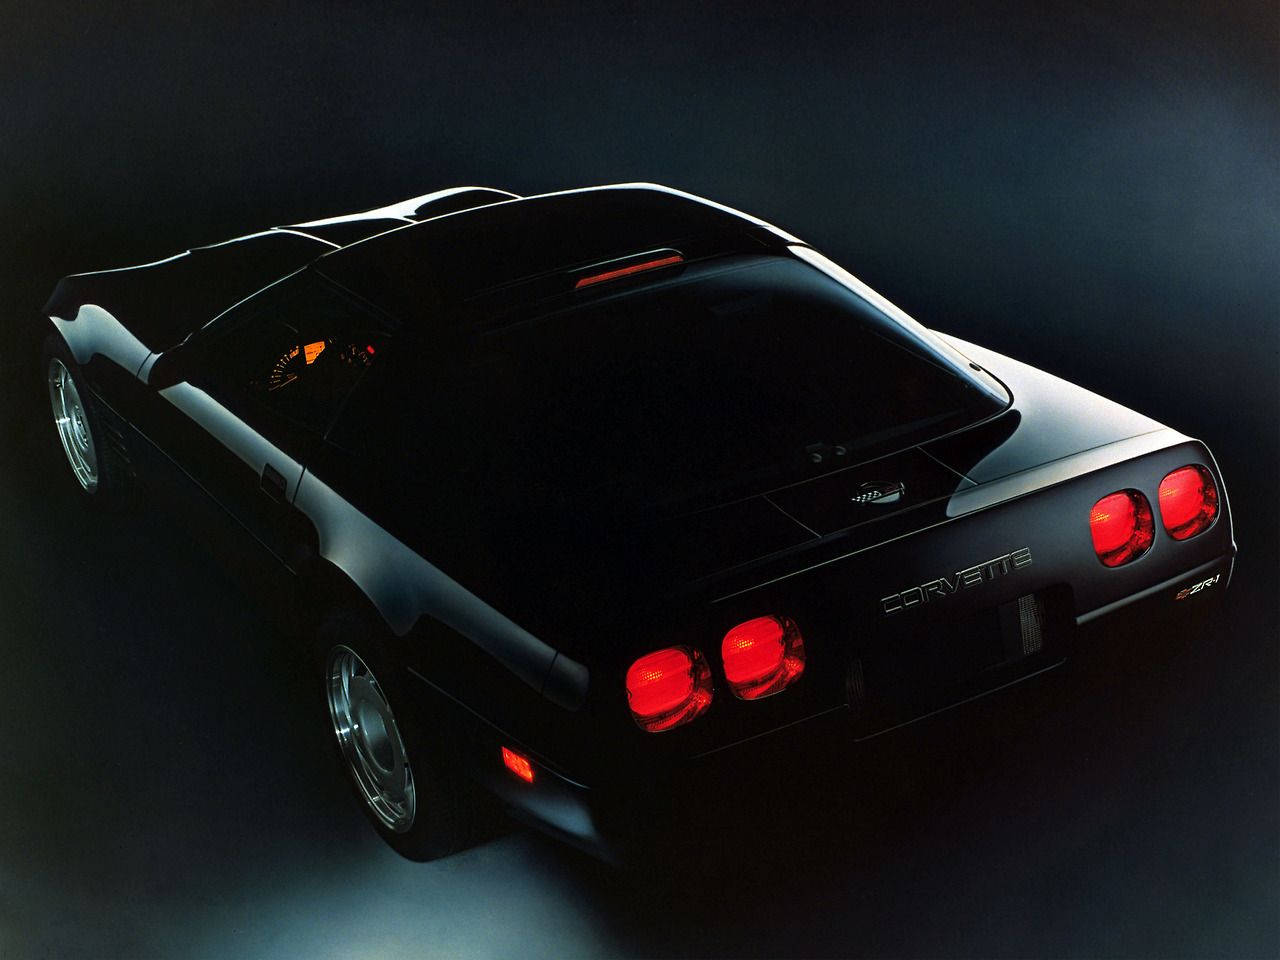 C4 Corvette In The Shadows